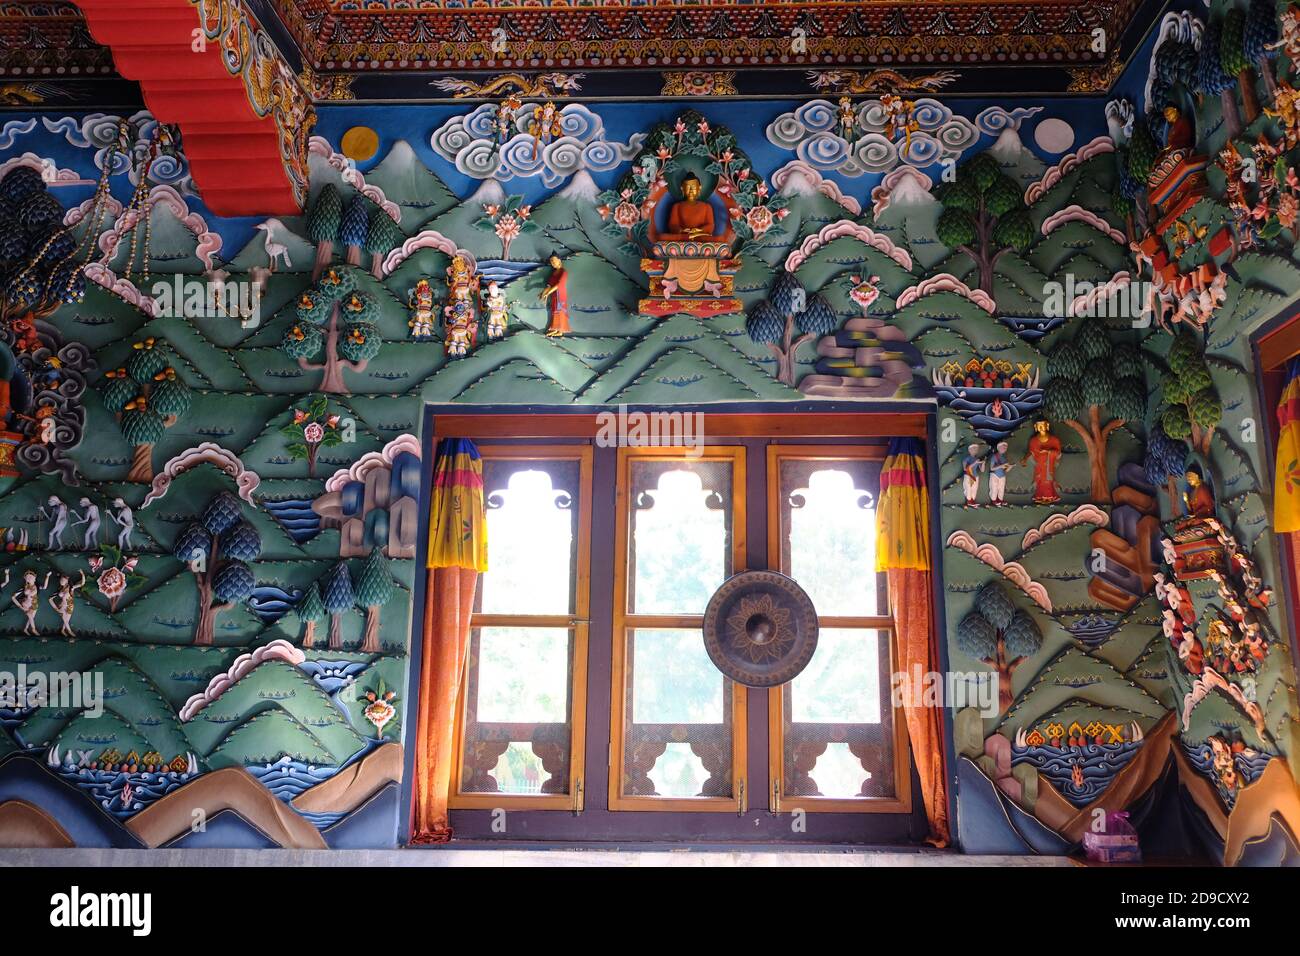 India Bodh Gaya - Royal Bhutan Monastery interior with buddhist religious wall paintings Stock Photo